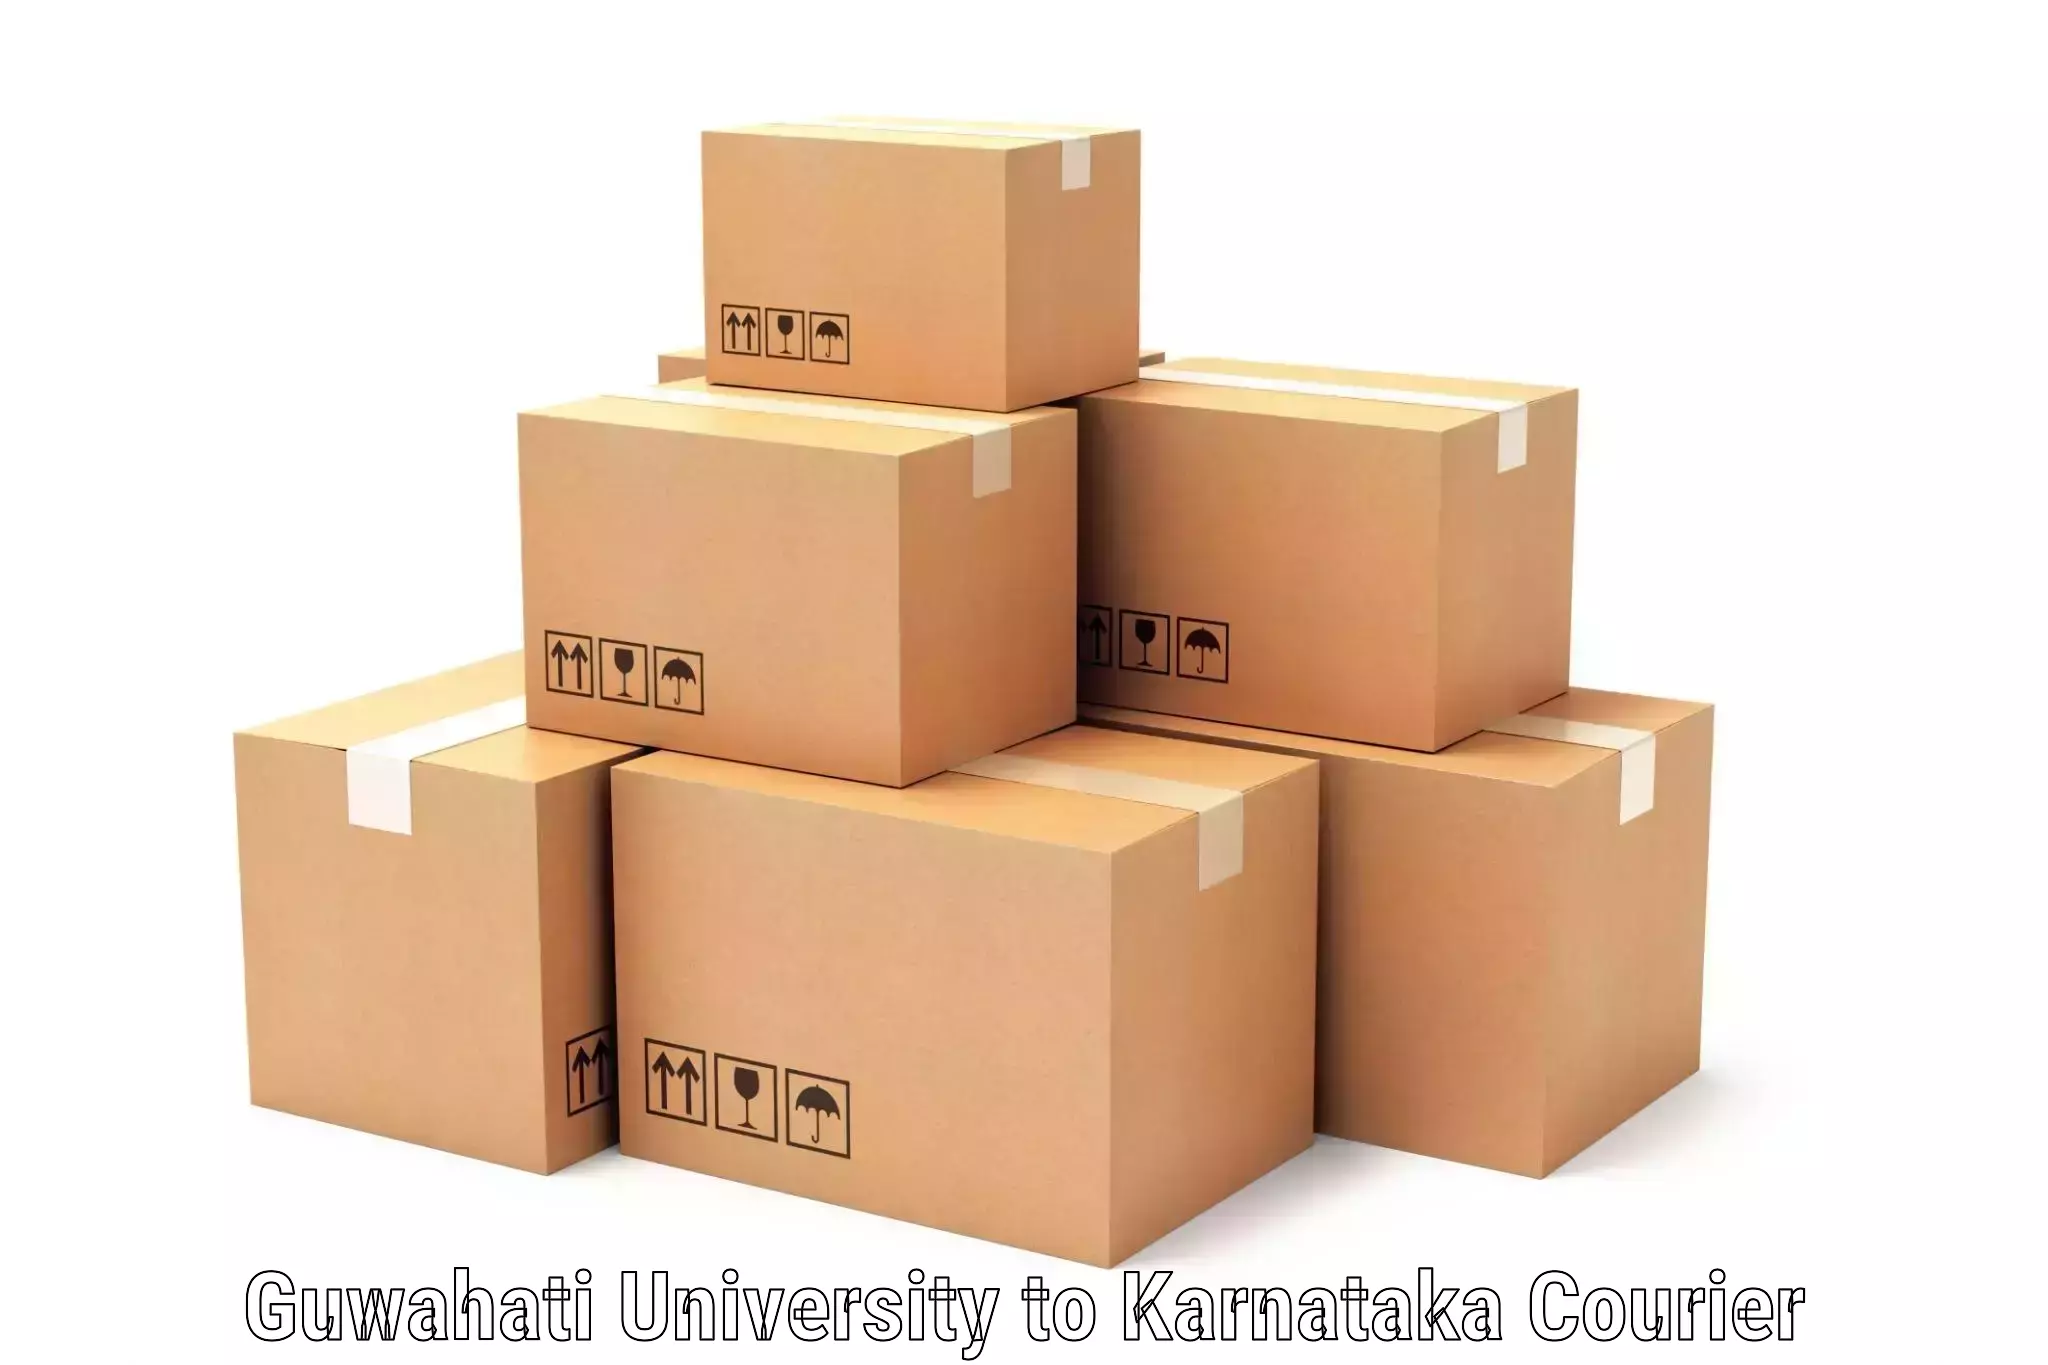 High-performance logistics Guwahati University to Uttara Kannada